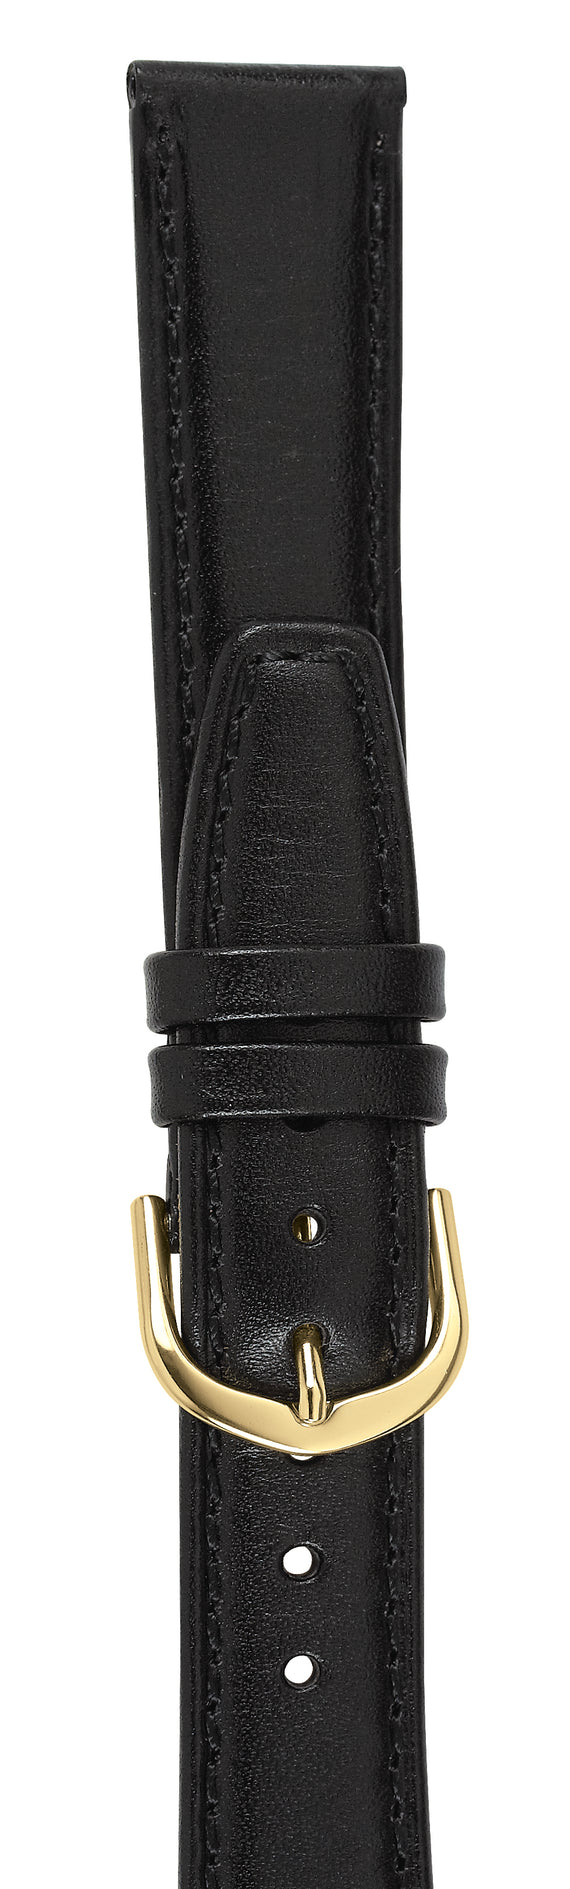 Black Royal Calf Leather Watch Strap 22mm